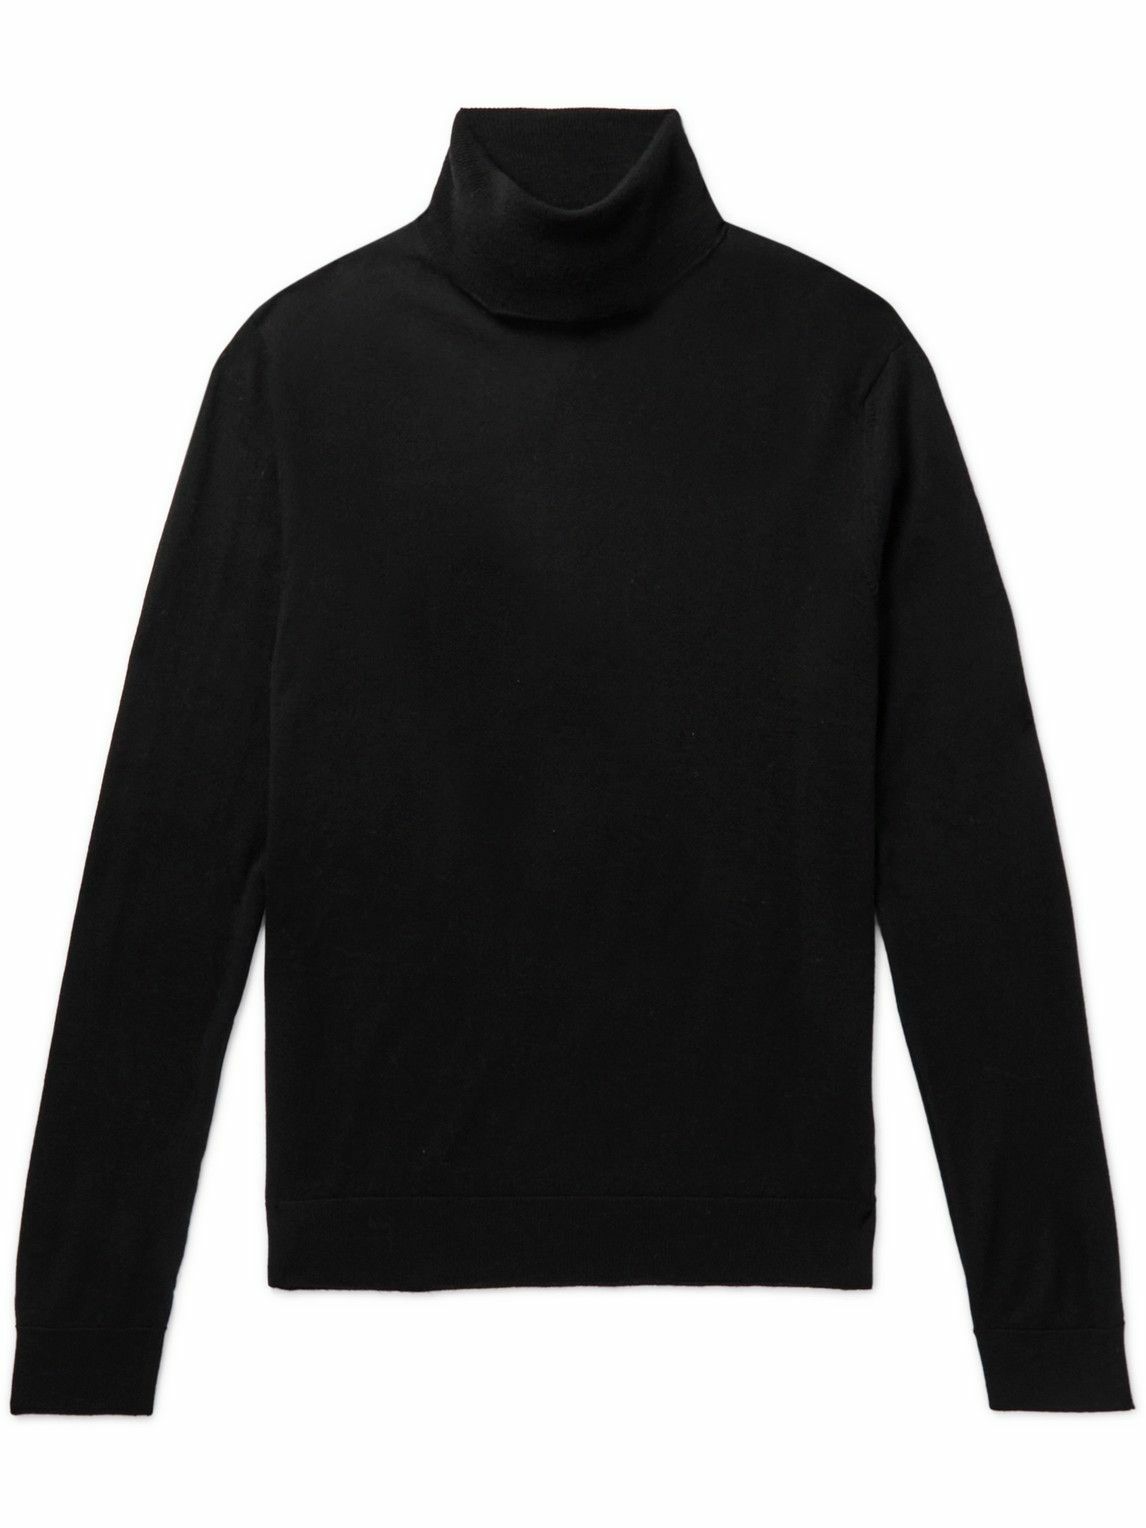 NN07 - Richard 6120 Merino-Wool Turtleneck Sweater - Black NN07